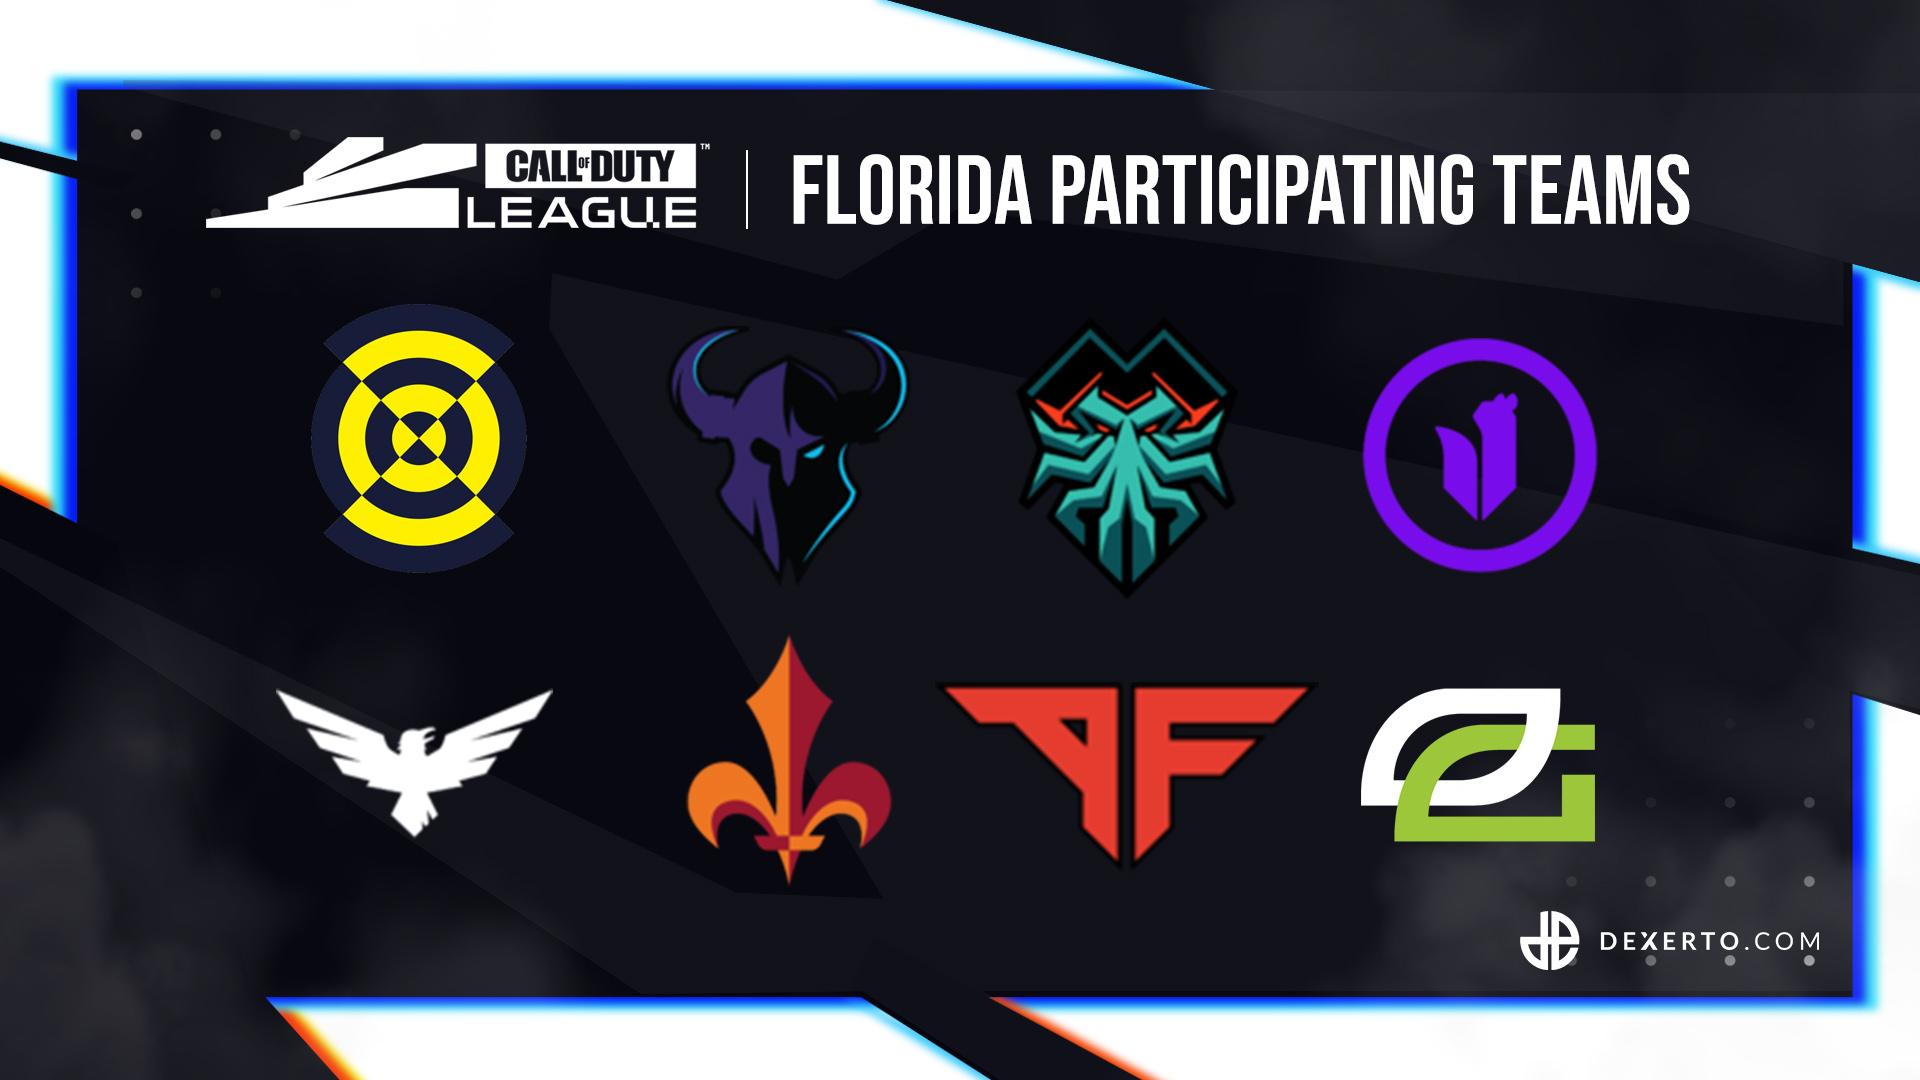 CDL Florida participating teams.